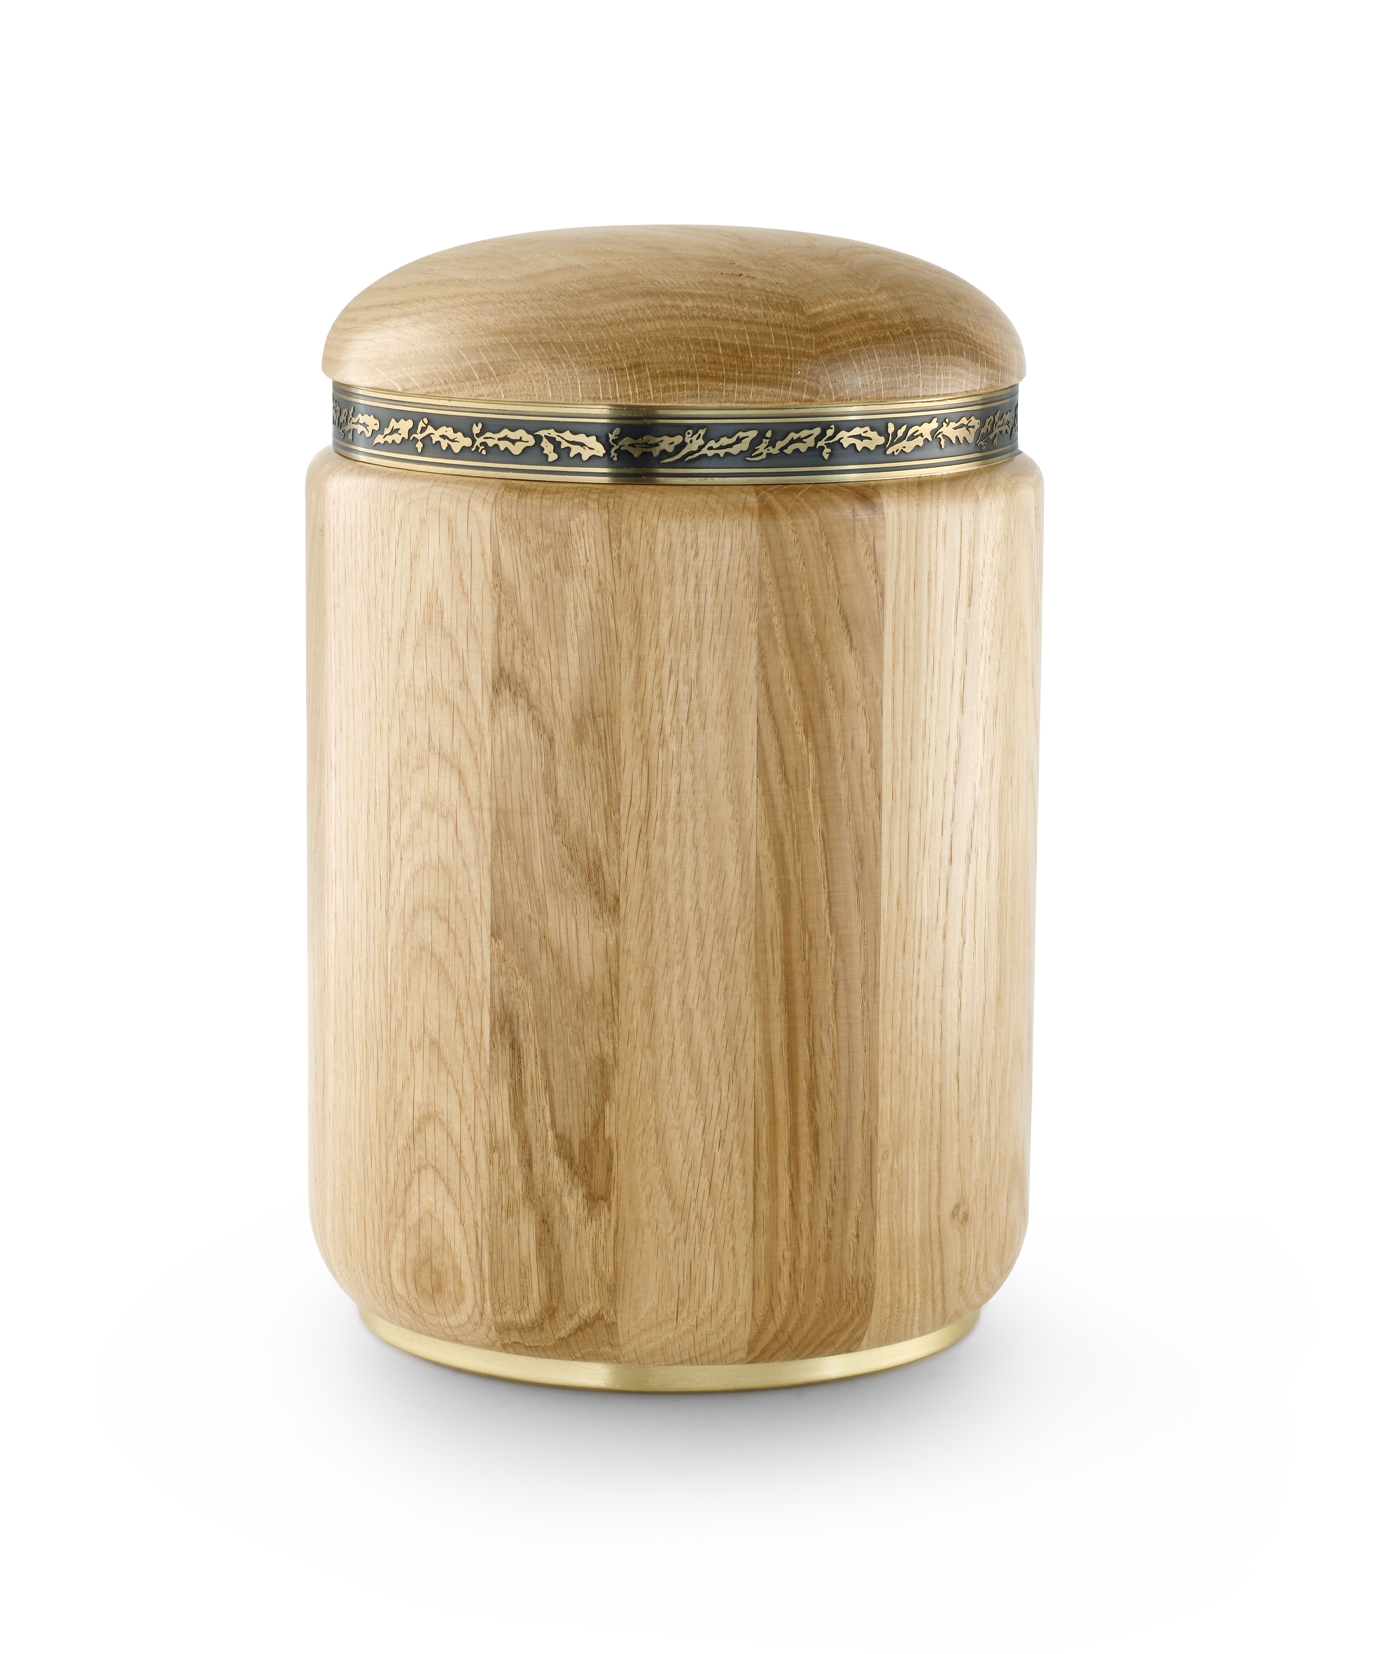 Völsing urn decorative ring solid brass wood